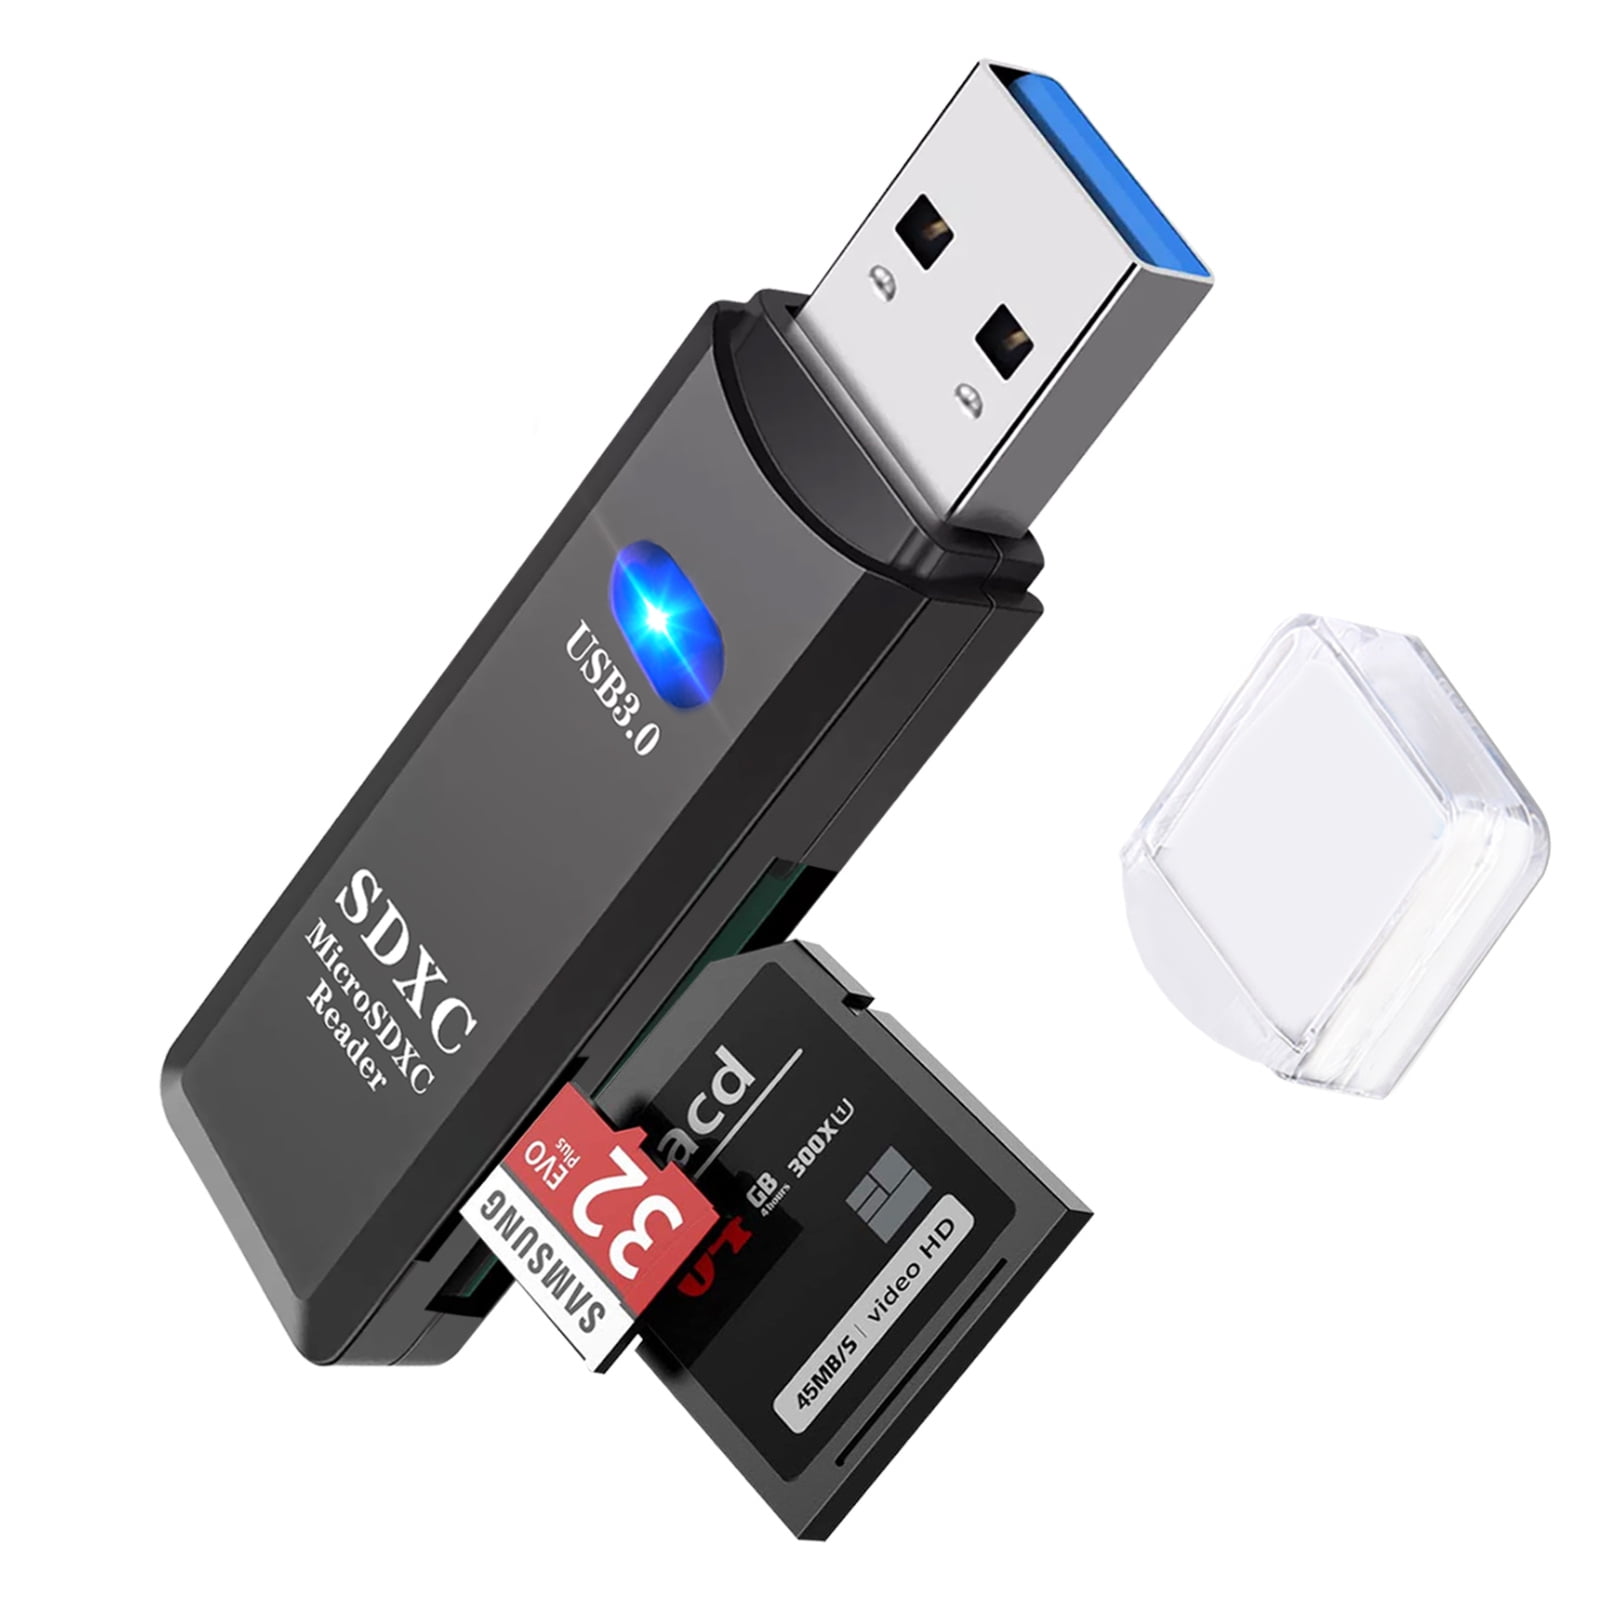 TSV USB 3.0 Portable Card Reader for SD, SDXC, MicroSD, MicroSDHC, MicroSDXC, All-in-One Design - USB 3.0 Micro SD SD Card Reader fits for Mac, Windows, Linux, Chrome, PC, Laptop -